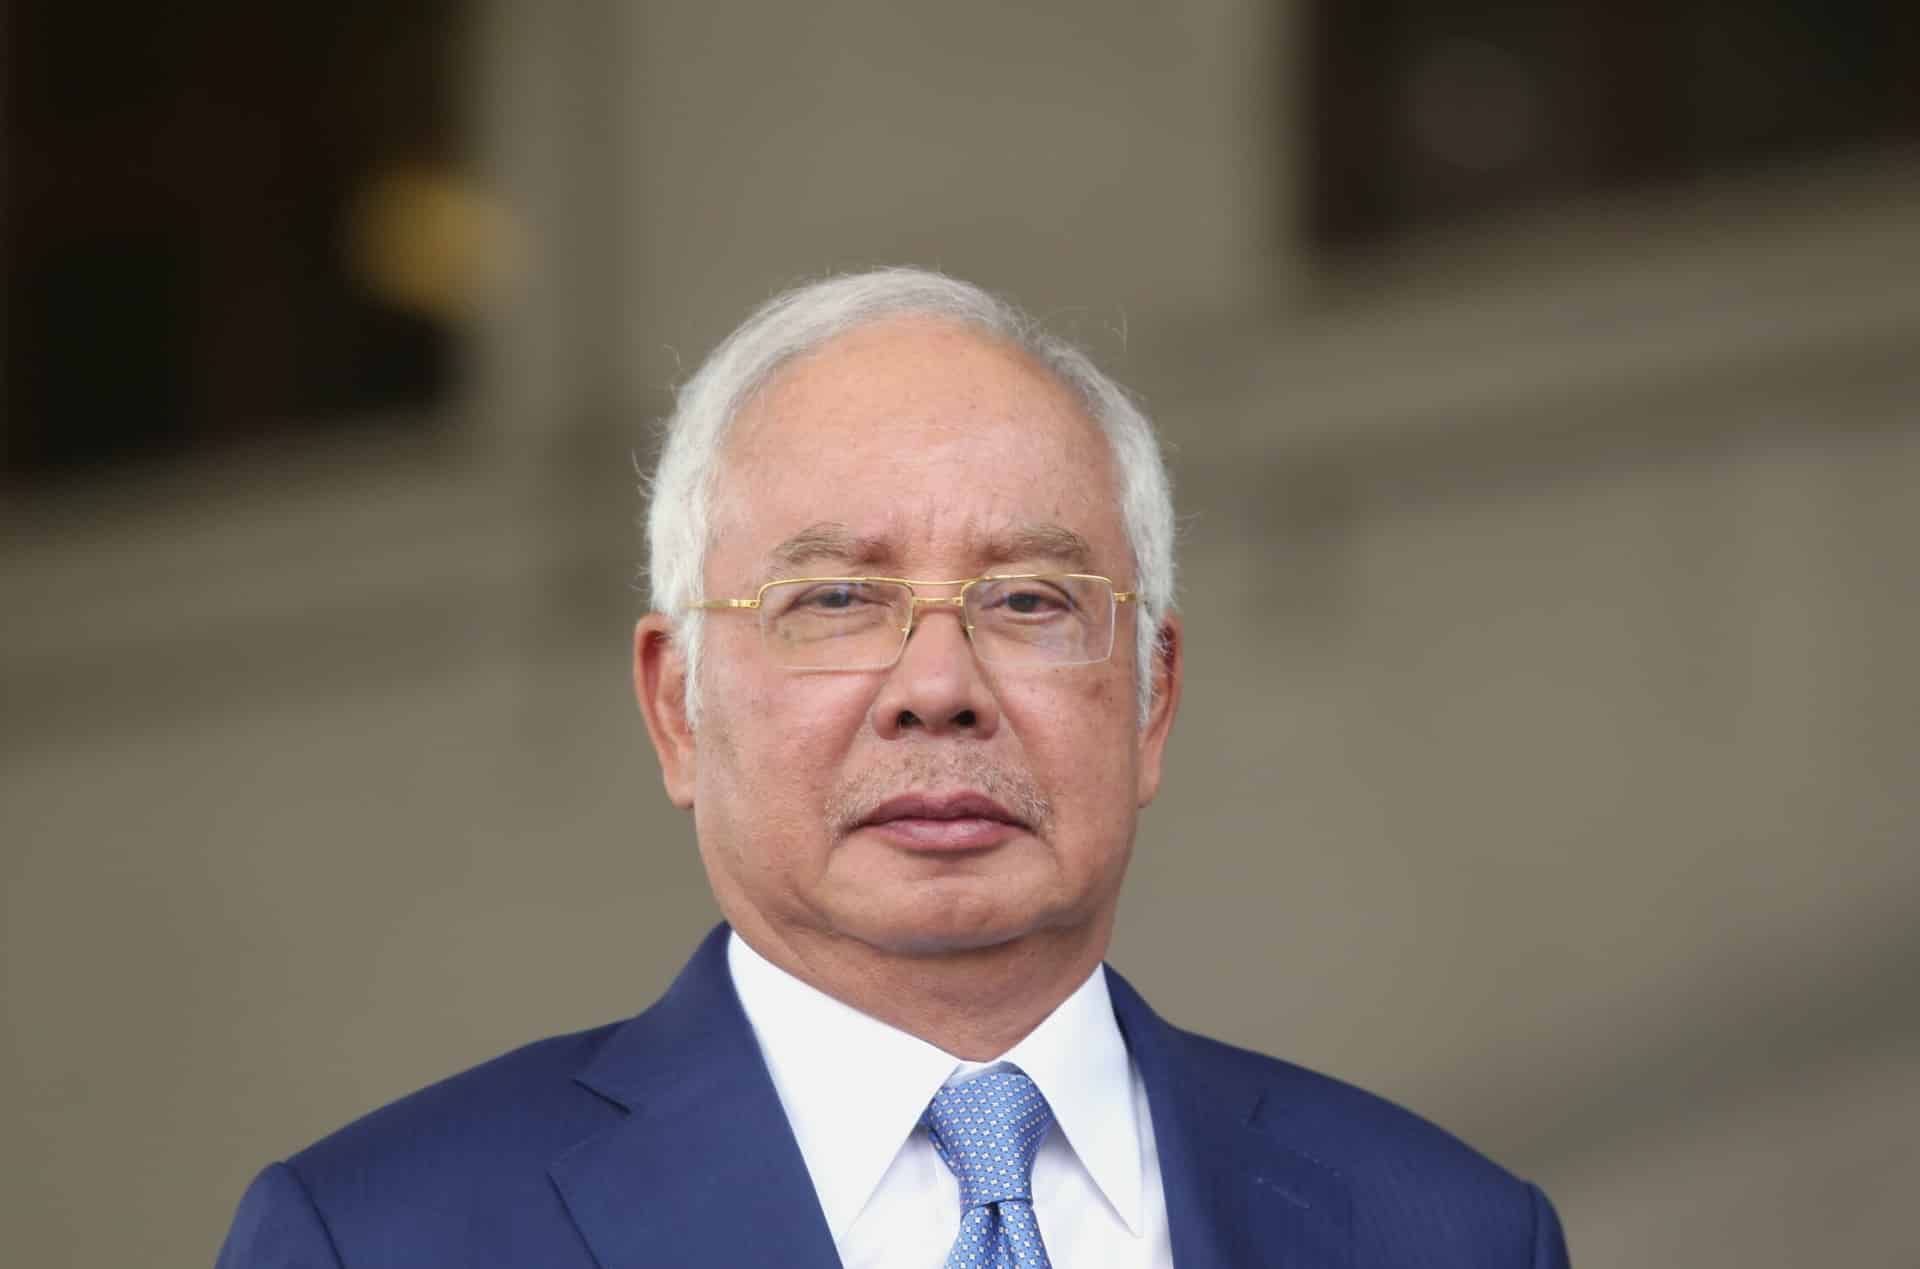 AMK bidas ahli parlimen PKR yang boikot ucapan belanjawan Najib